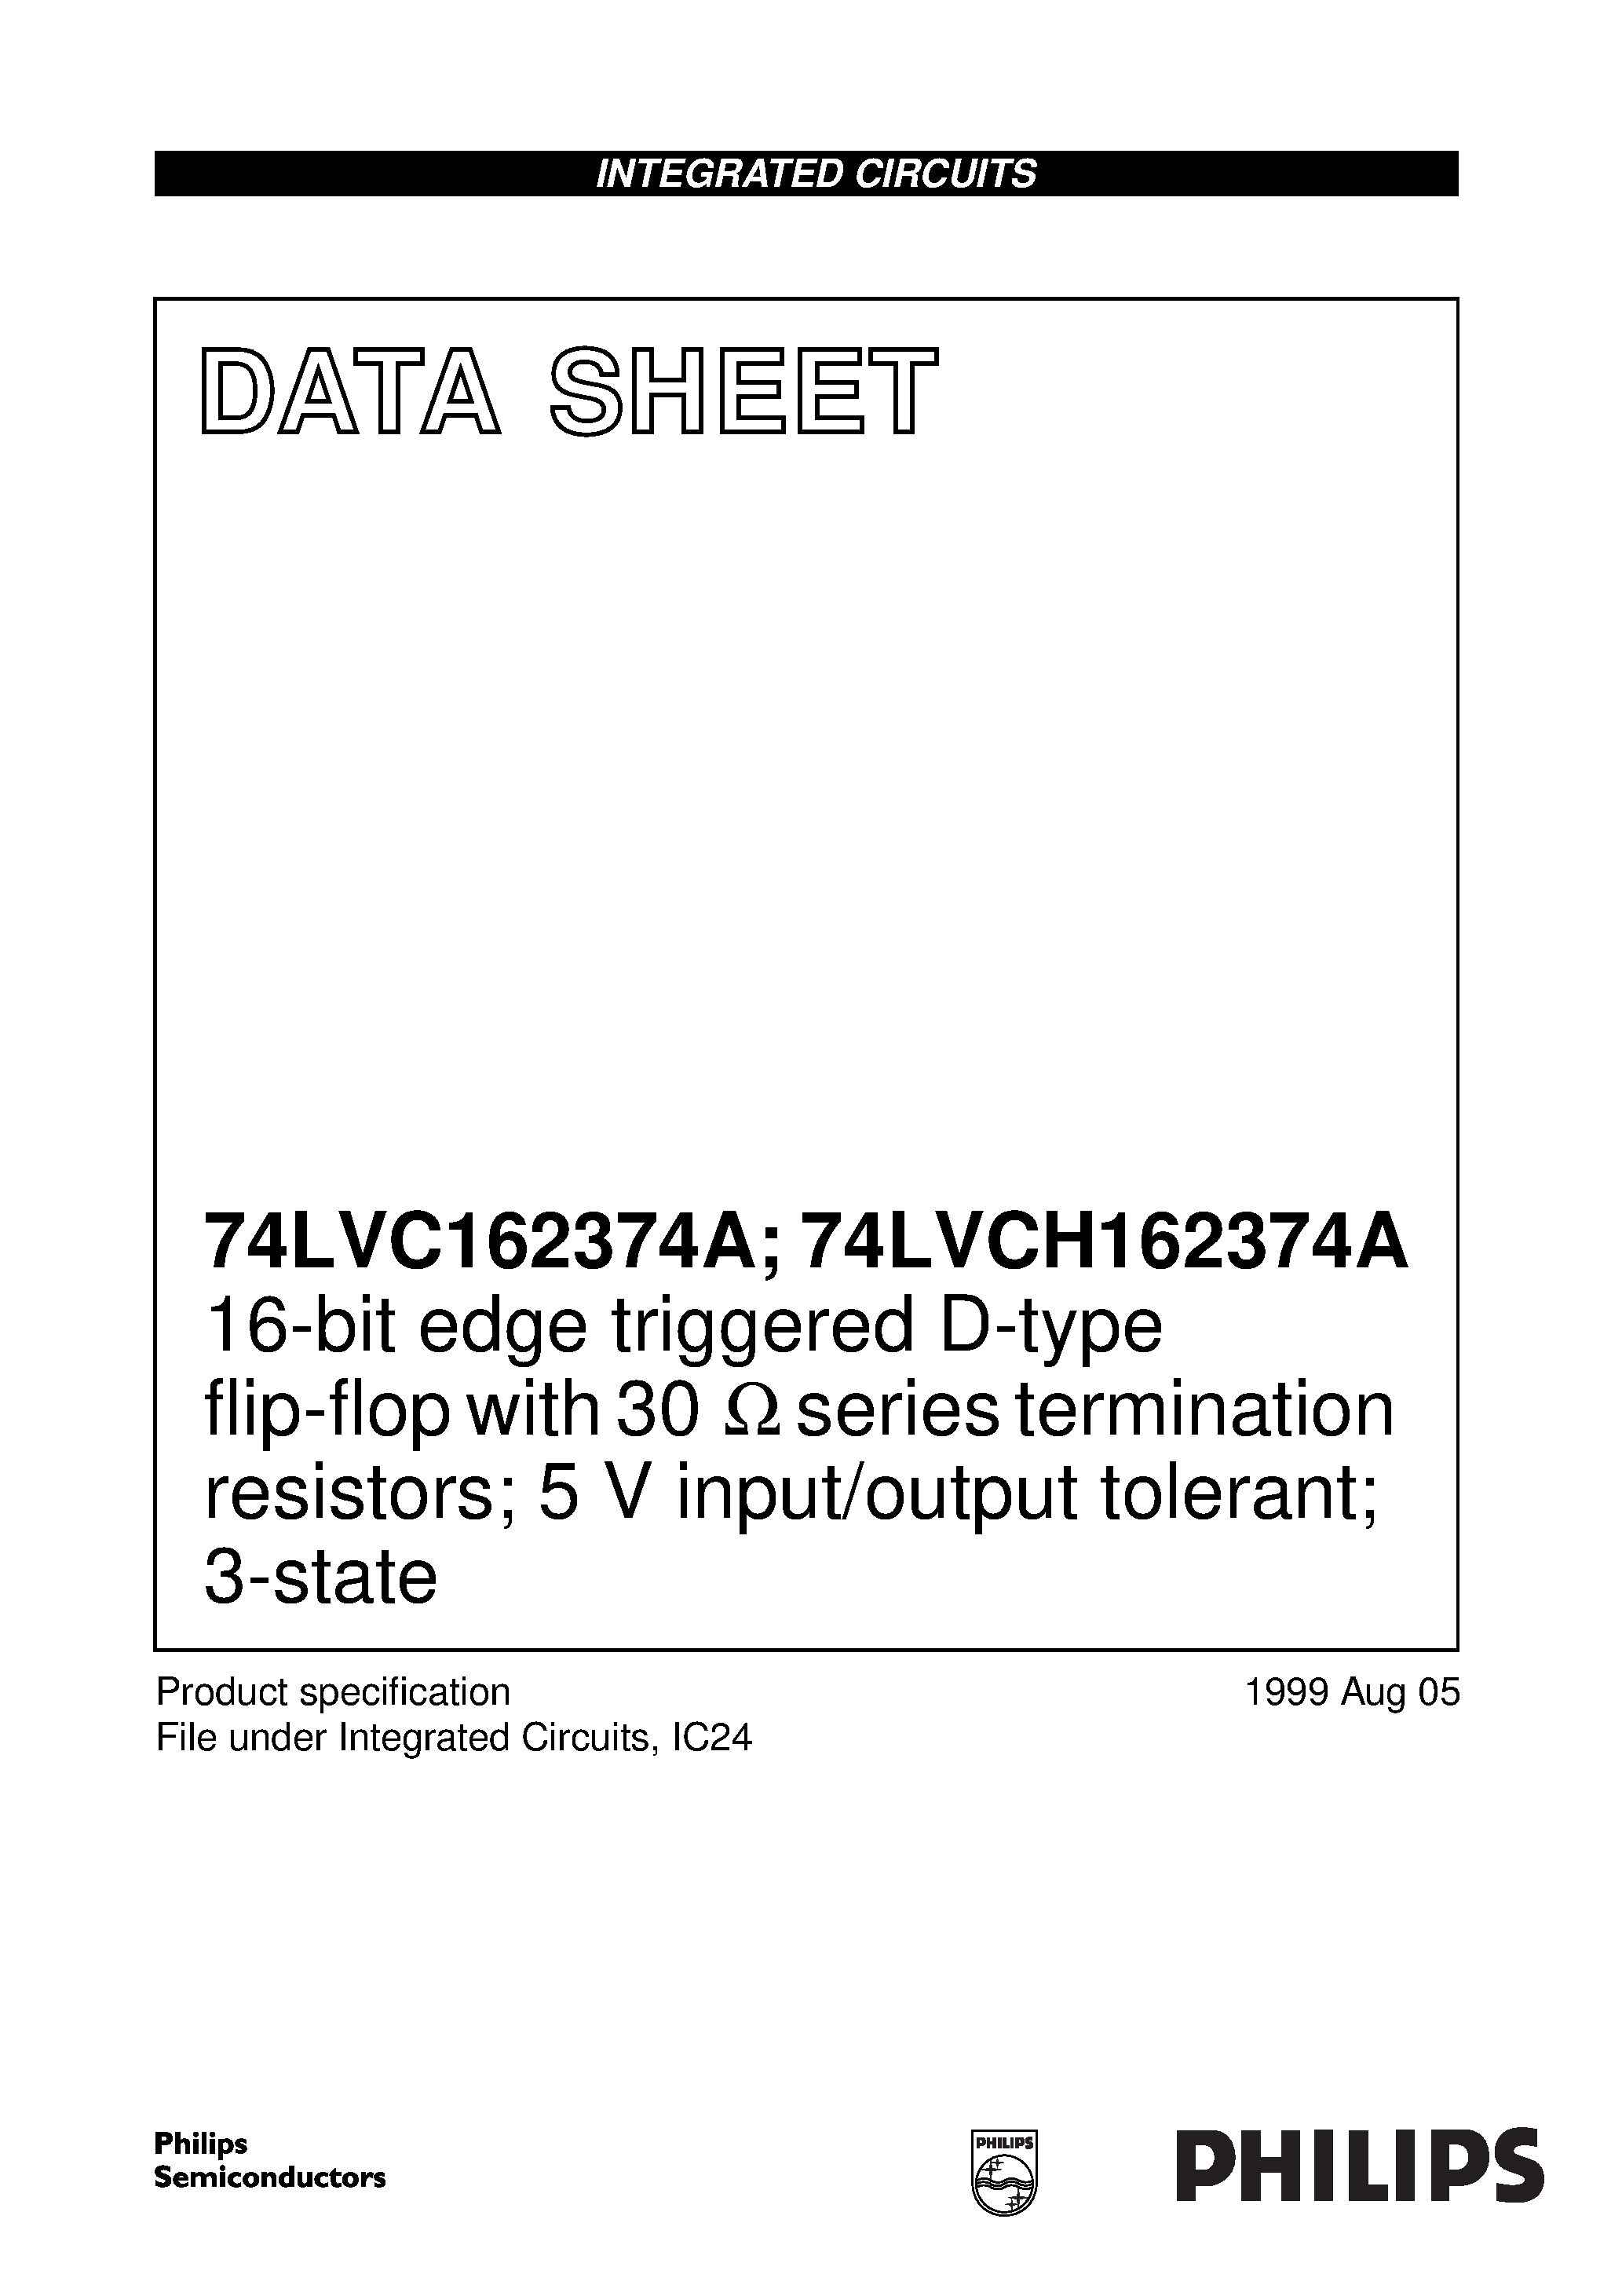 Даташит VC162374ADGG - 16-bit edge triggered D-type flip-flop with 30 ohmseries termination resistors; 5 V input/output tolerant; 3-state страница 1